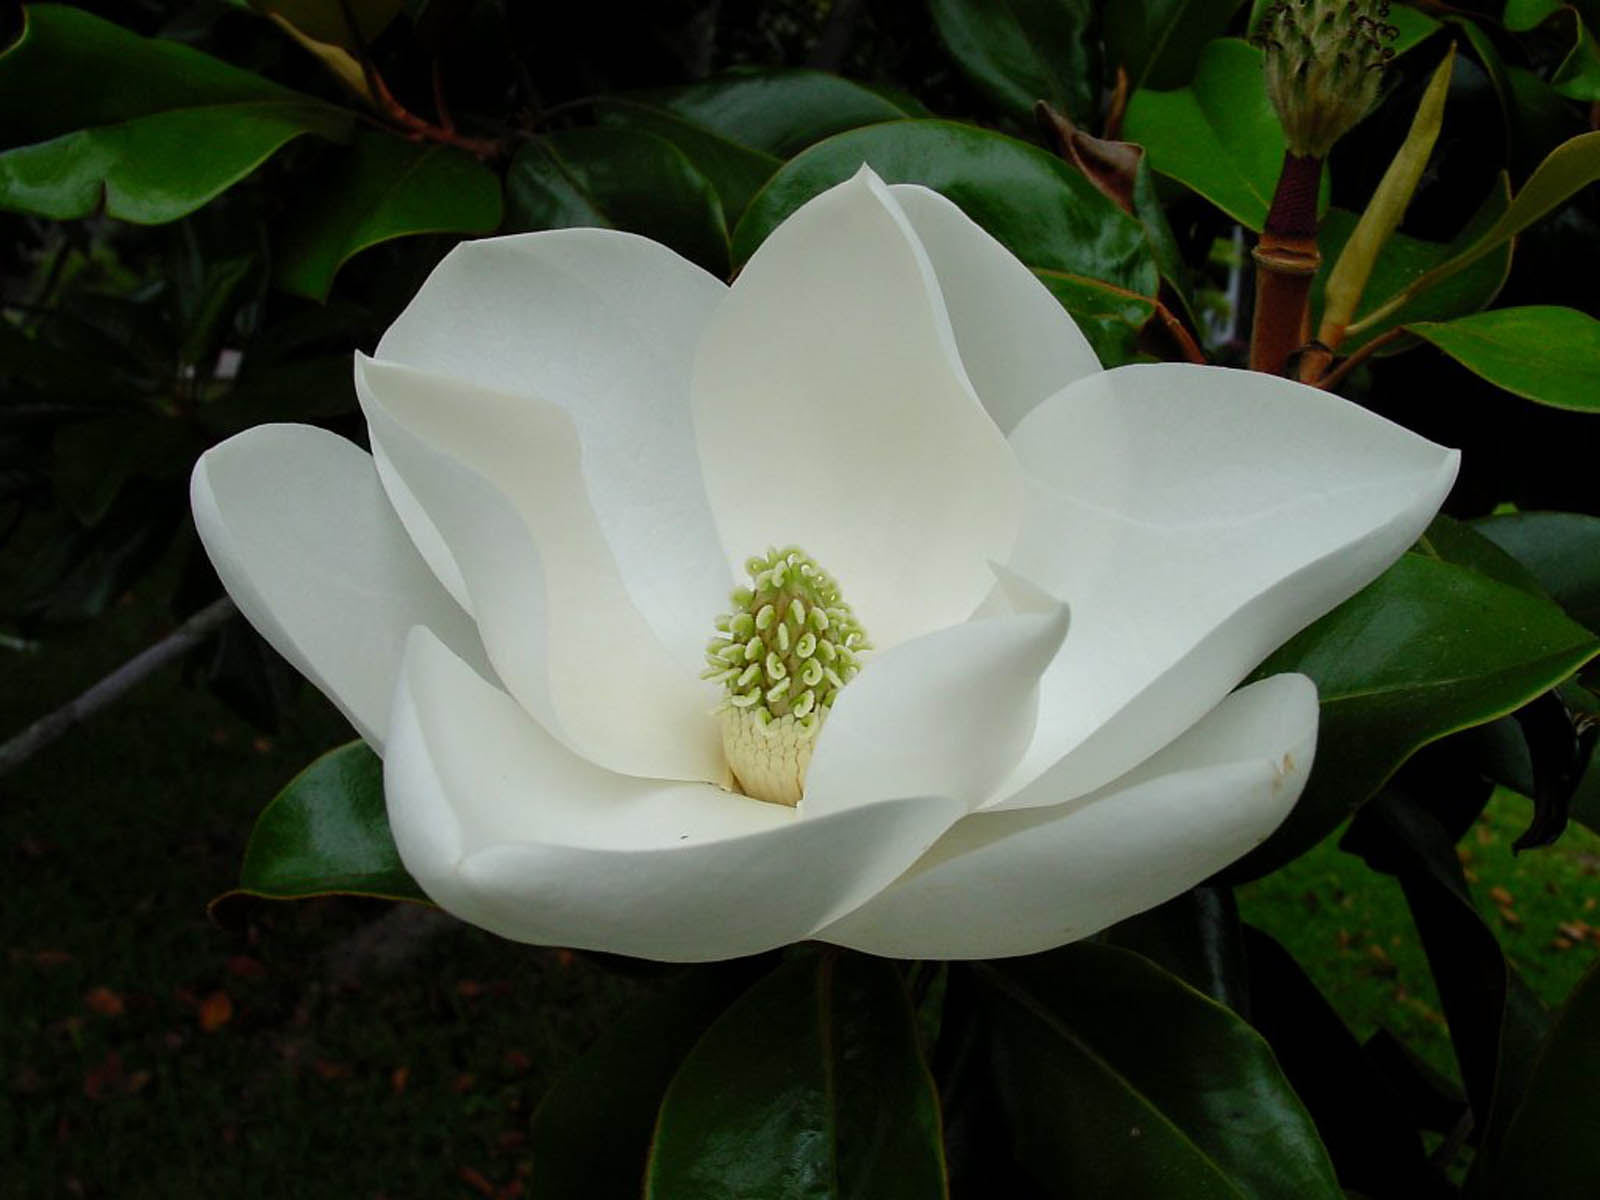 The Magnolia Blossom Wallpaper Desktop